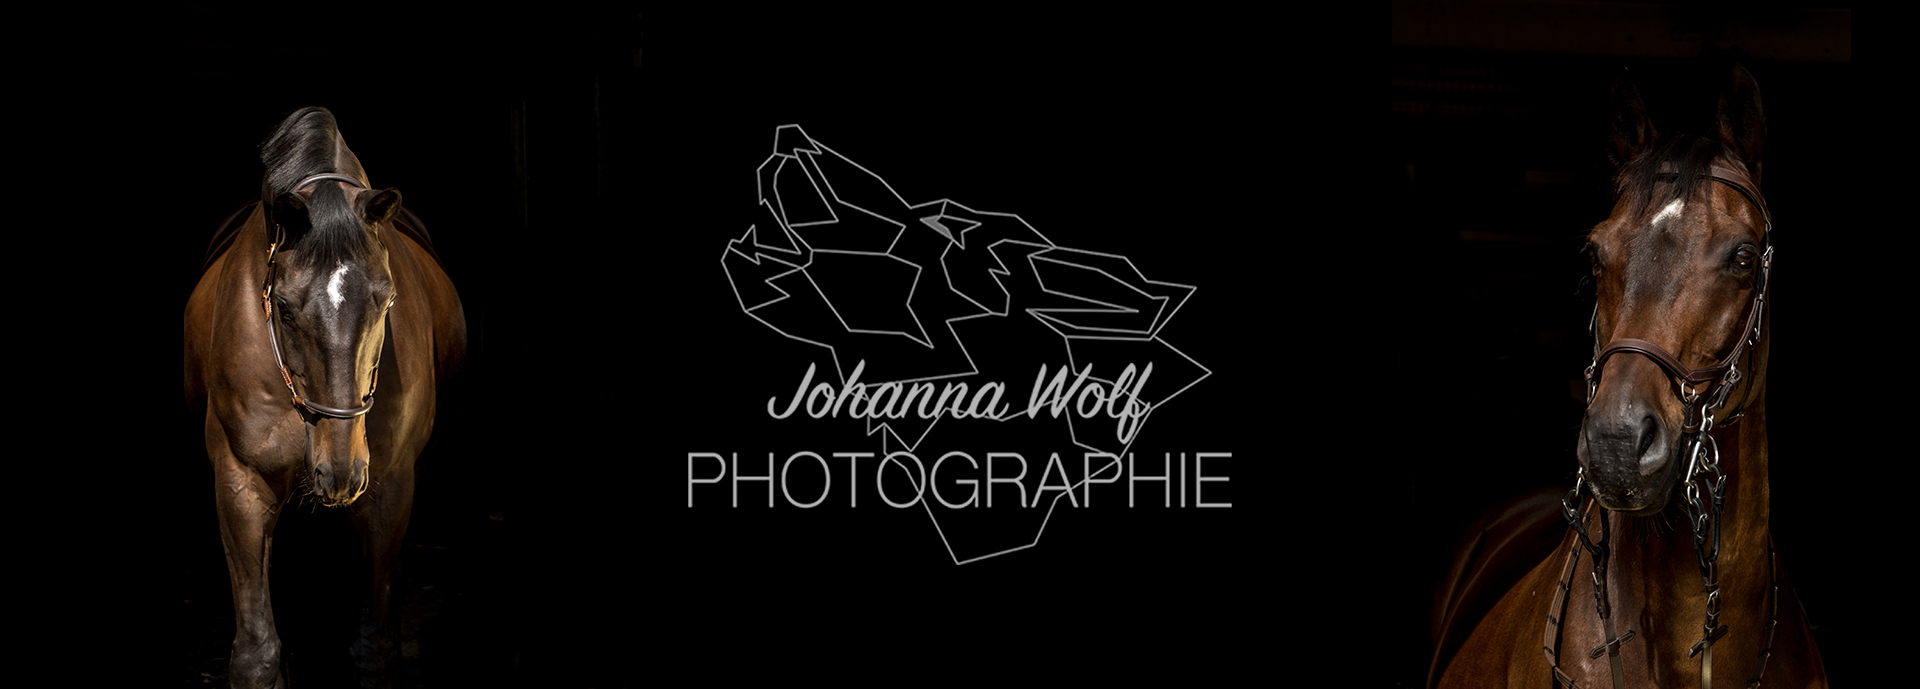 Johanna Wolf Photographie